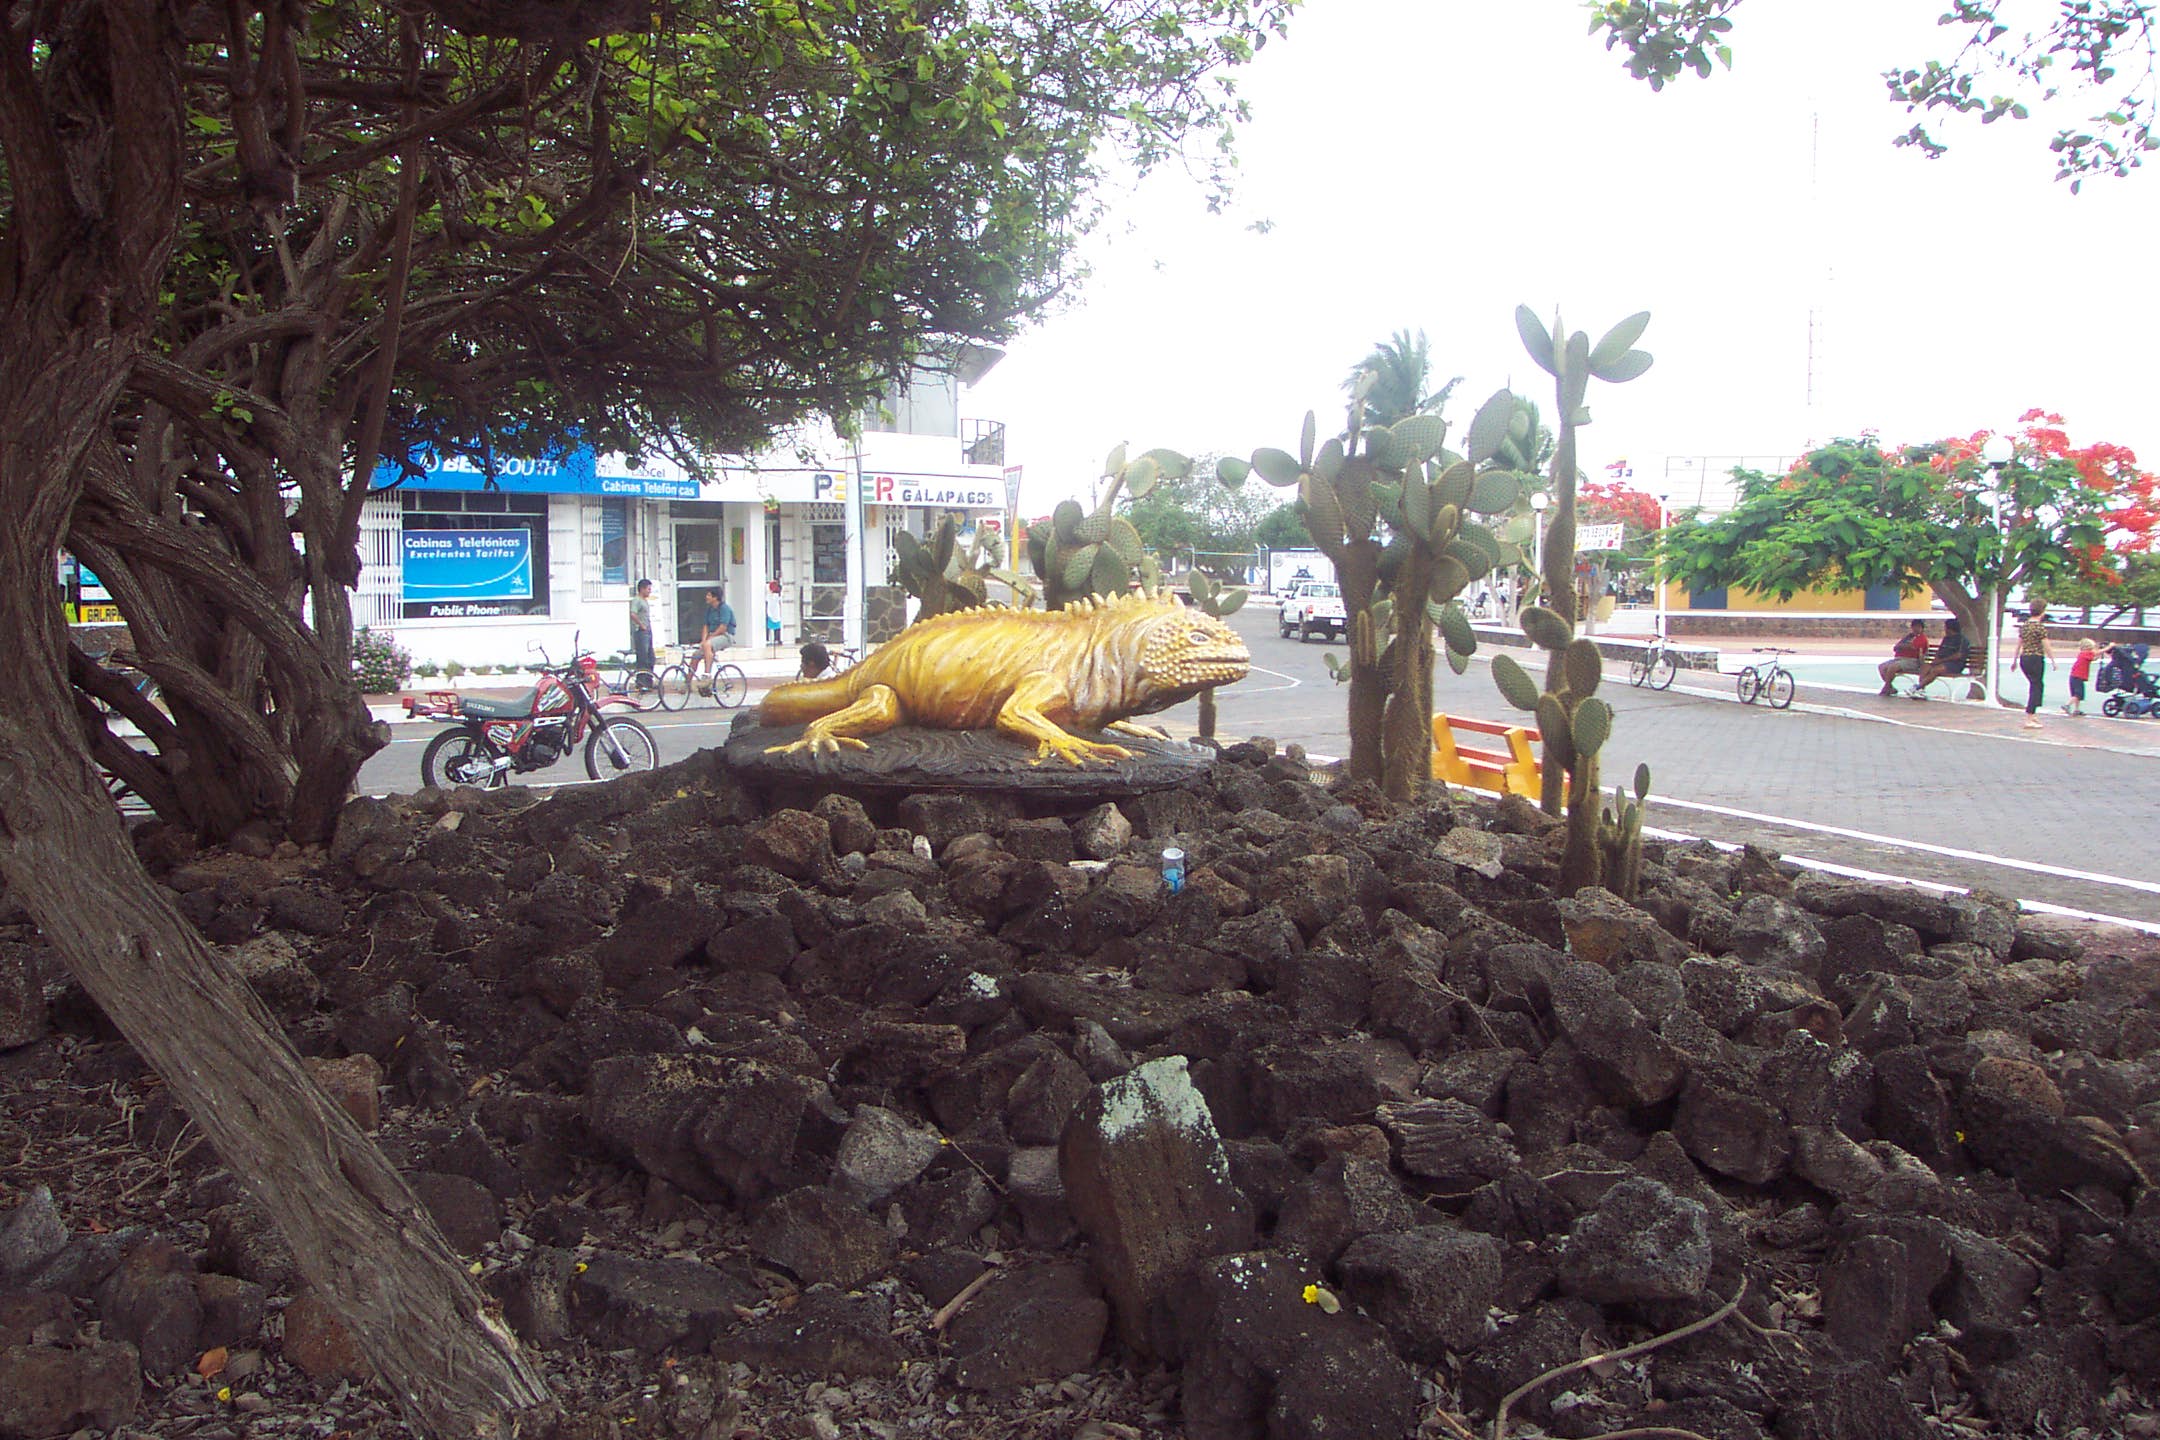 Iguana statue in Puerto Ayora